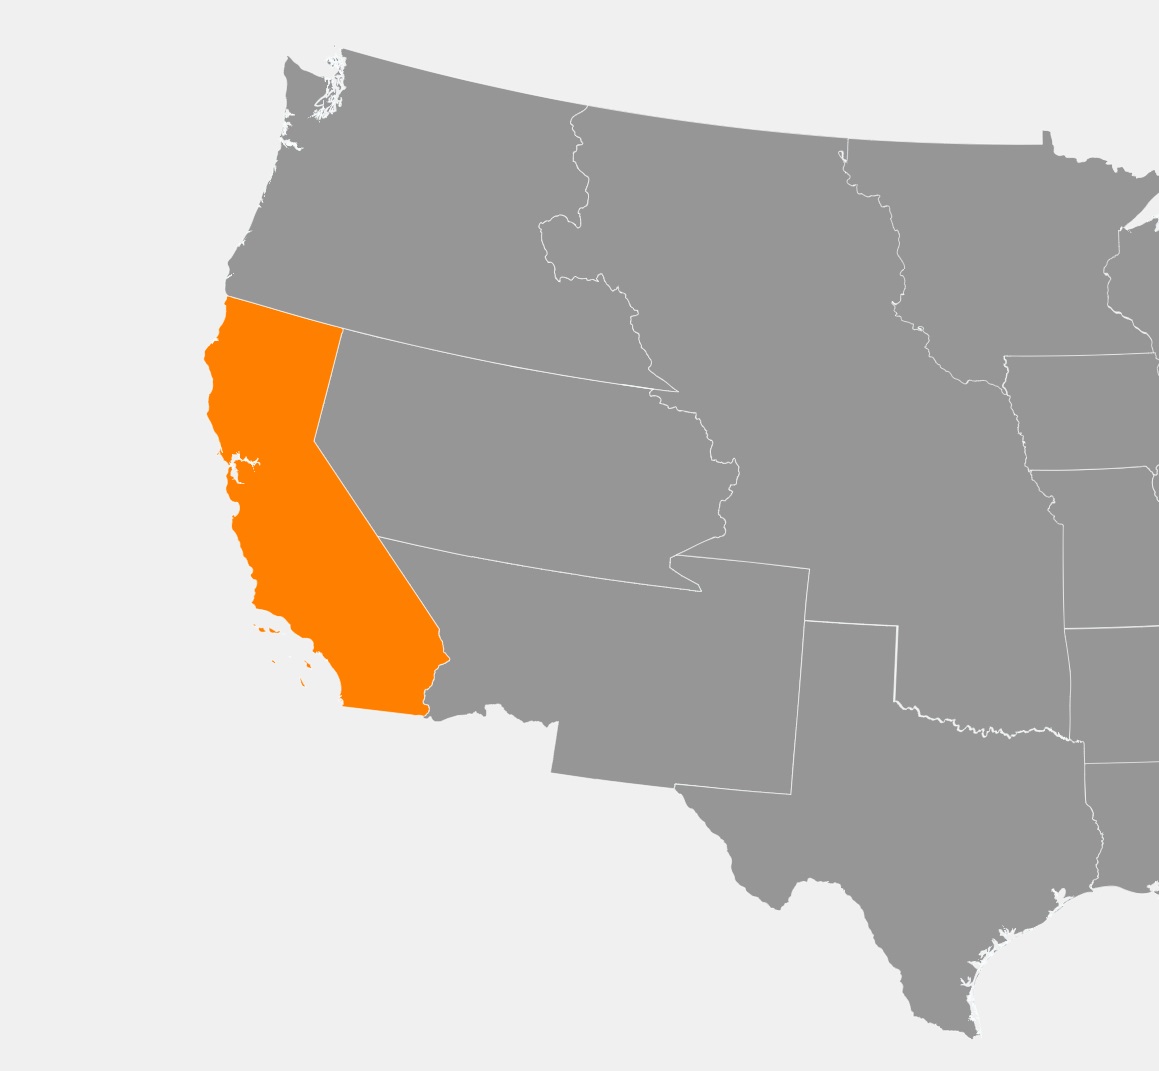 California Mission Map